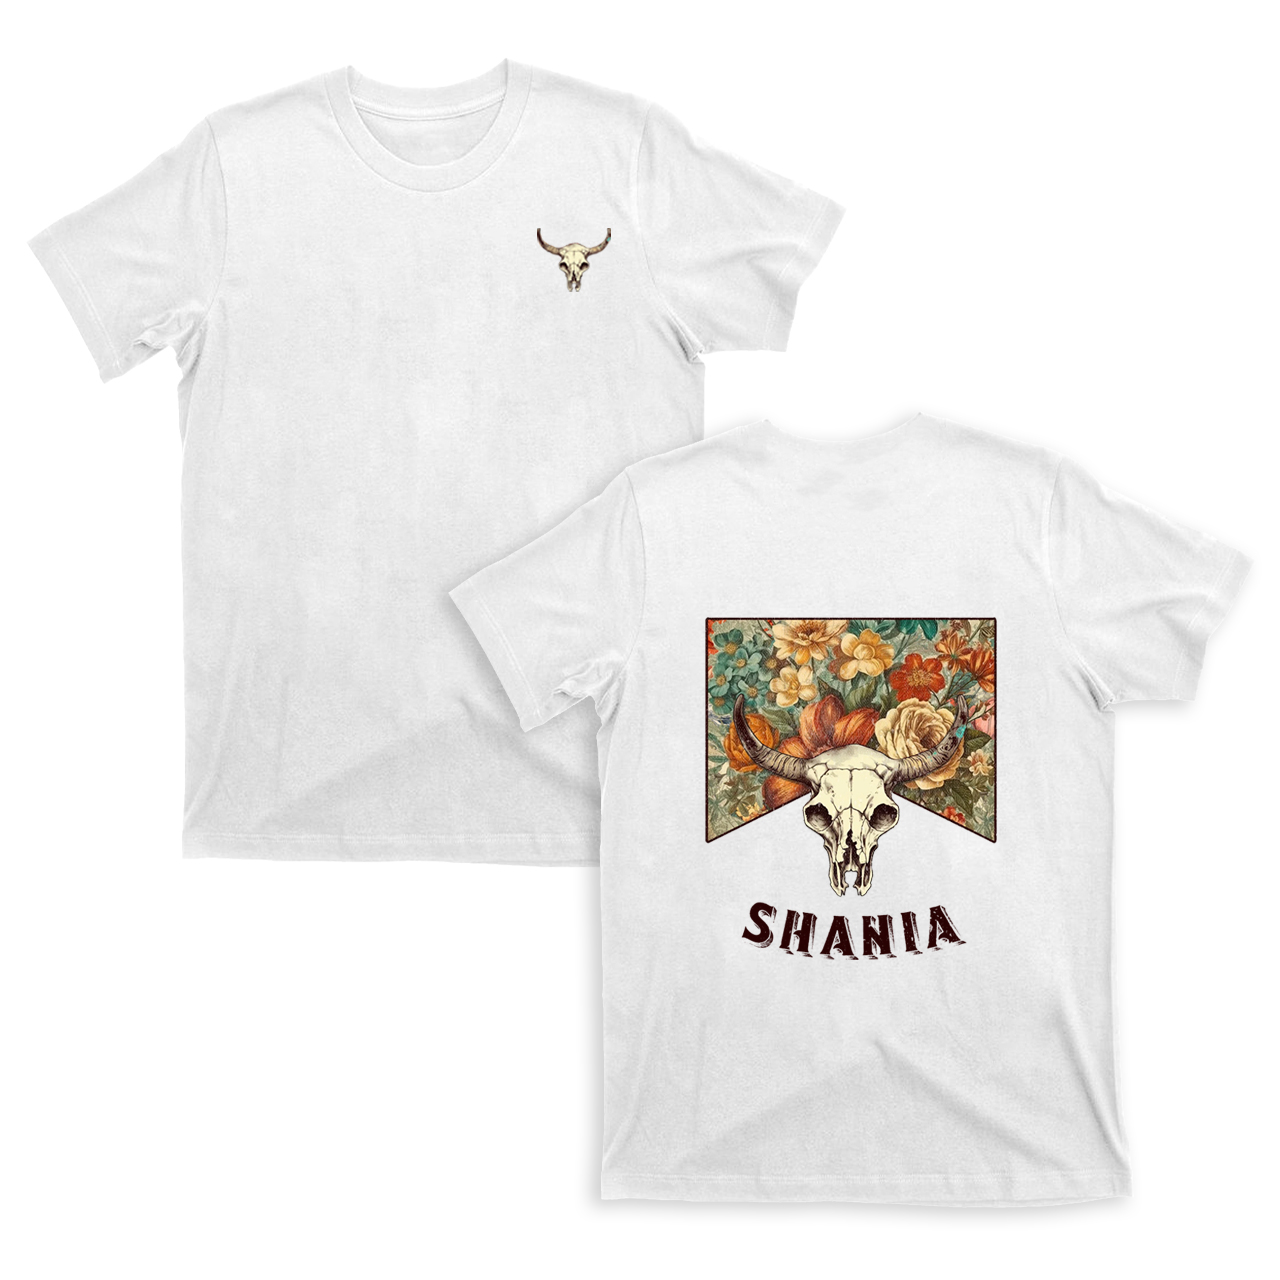 Shania Twain 90's Country Music T-Shirts